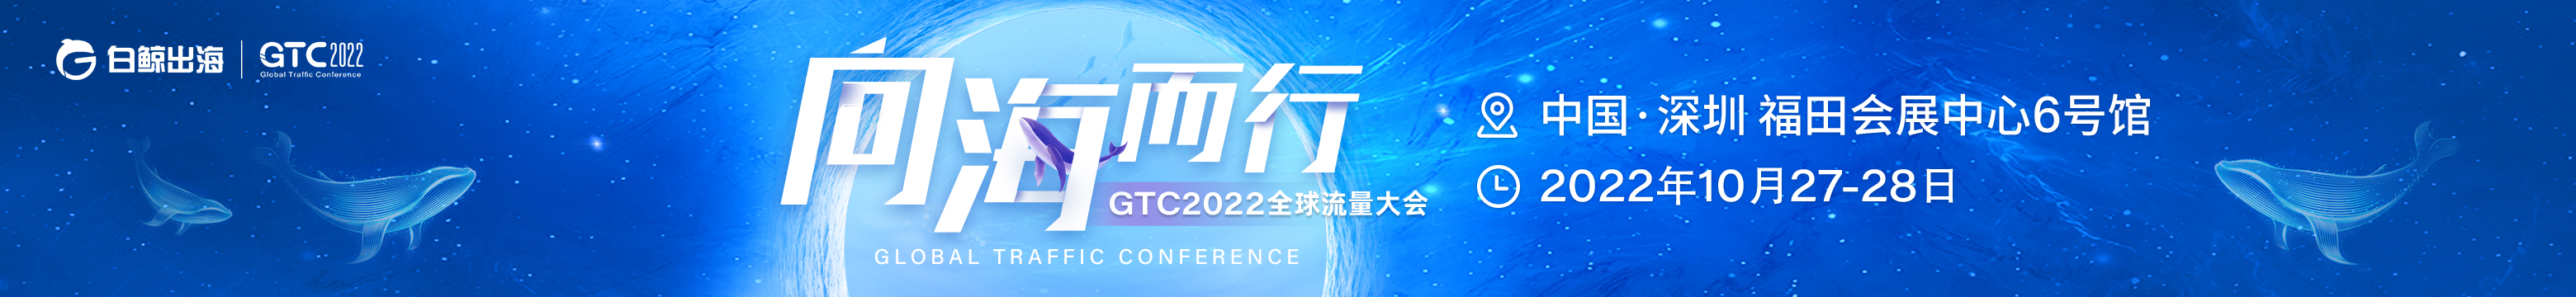 GTC2022全球流量大会—向海而行（2022-10-27至2022-10-28）